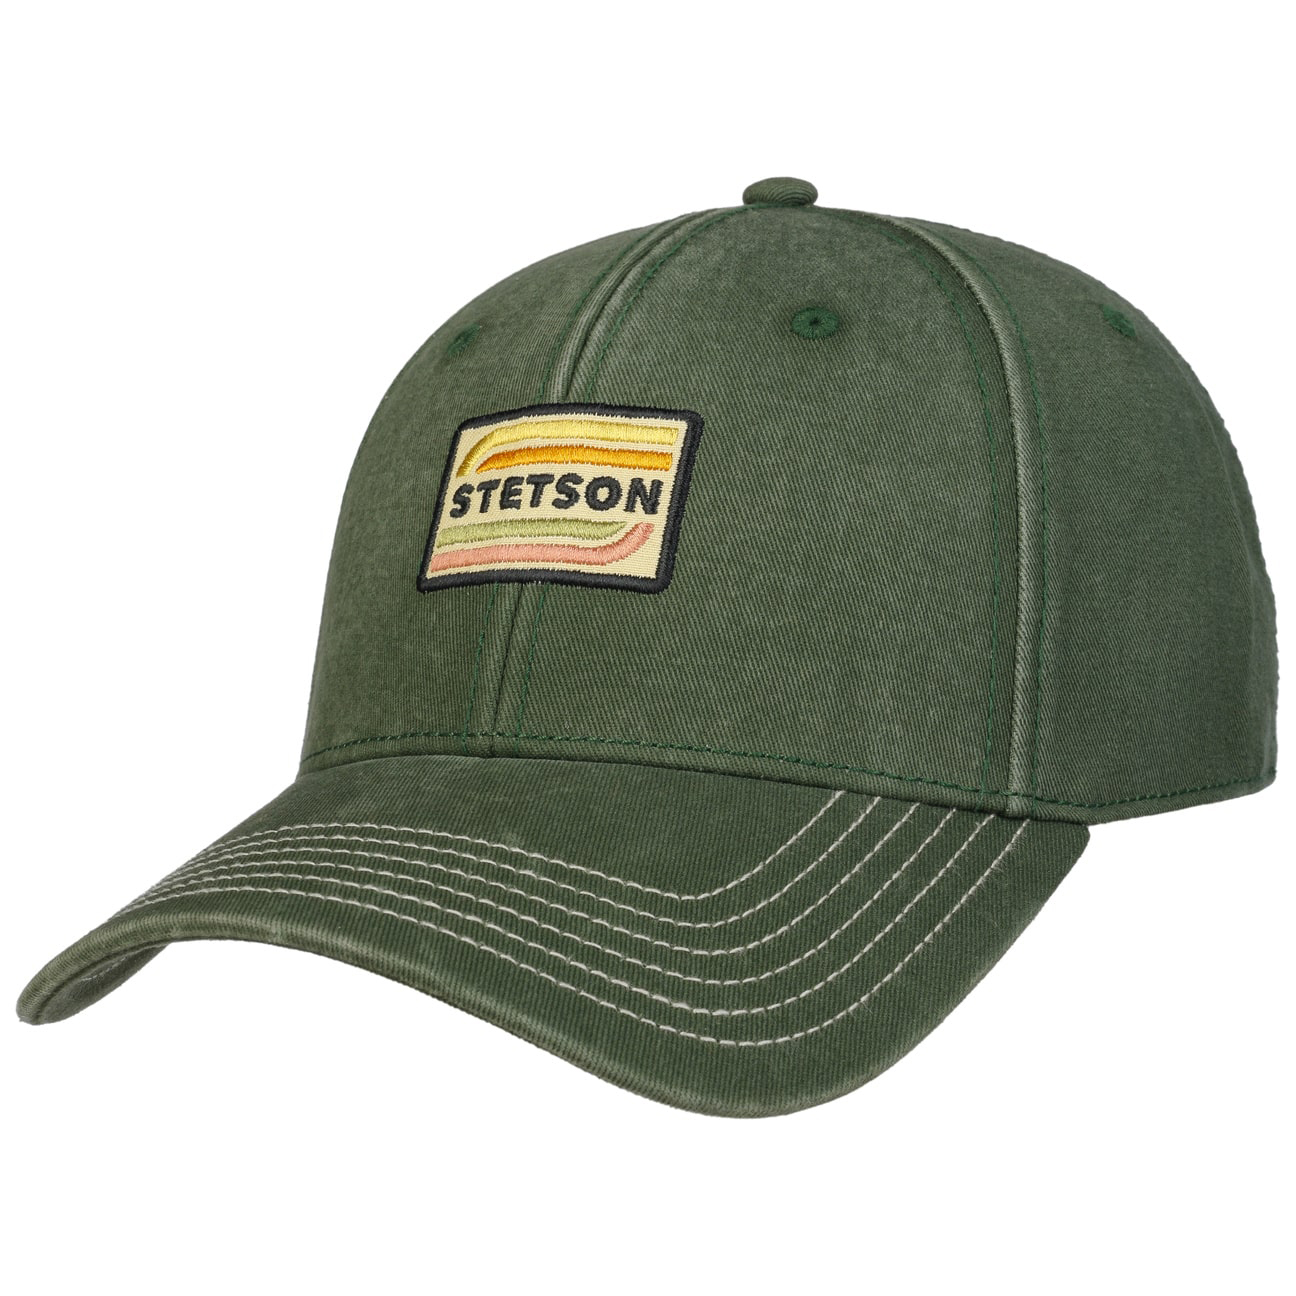 Stetson - Lenloy Cotton Cap - Green